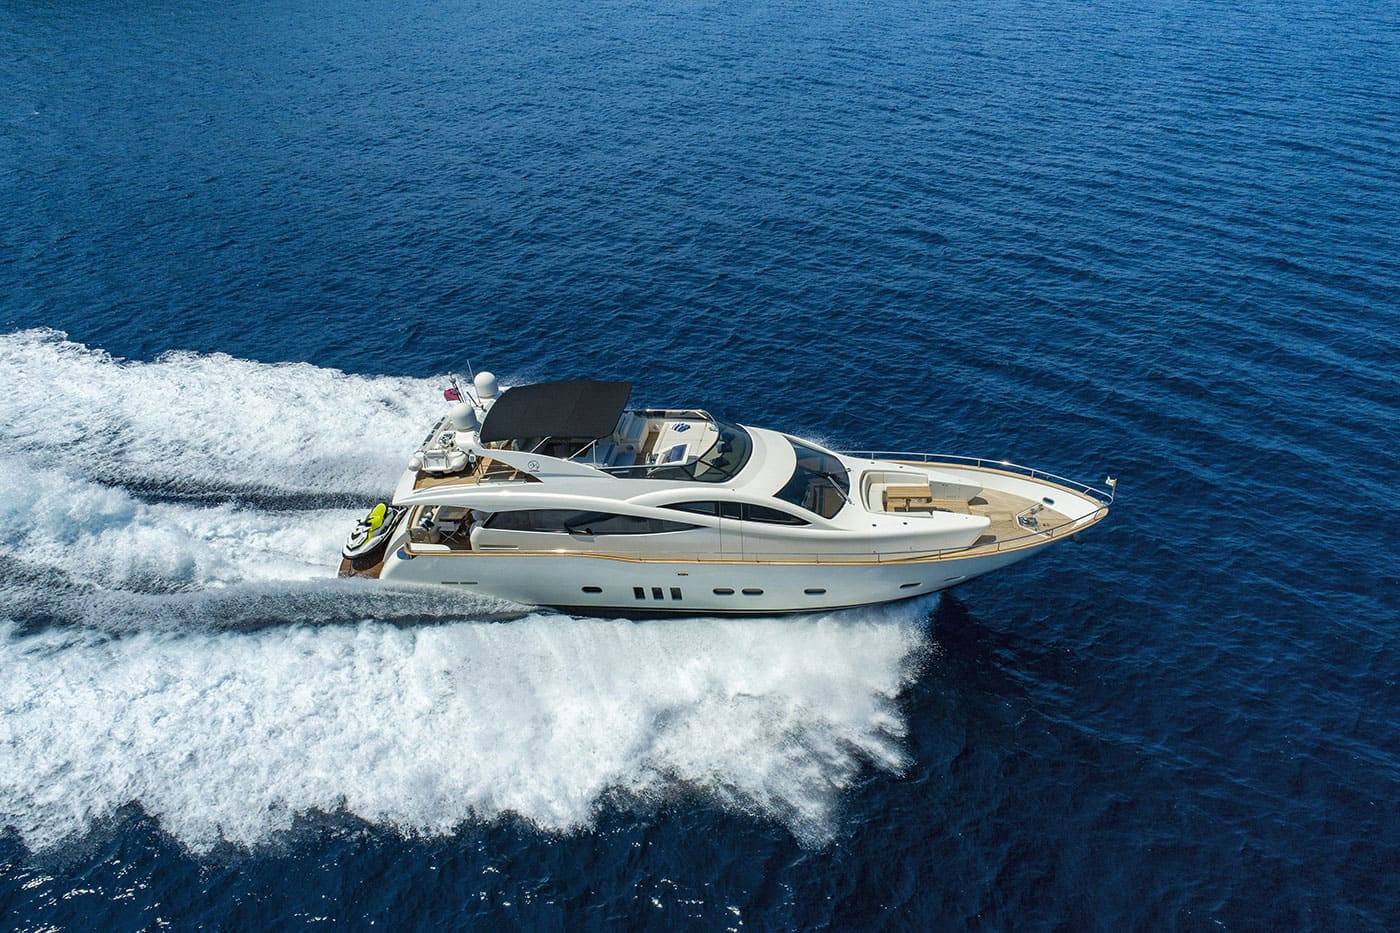 luxury motor yacht Salt rented in Dubrovnik is cruising toward Ston peninsula